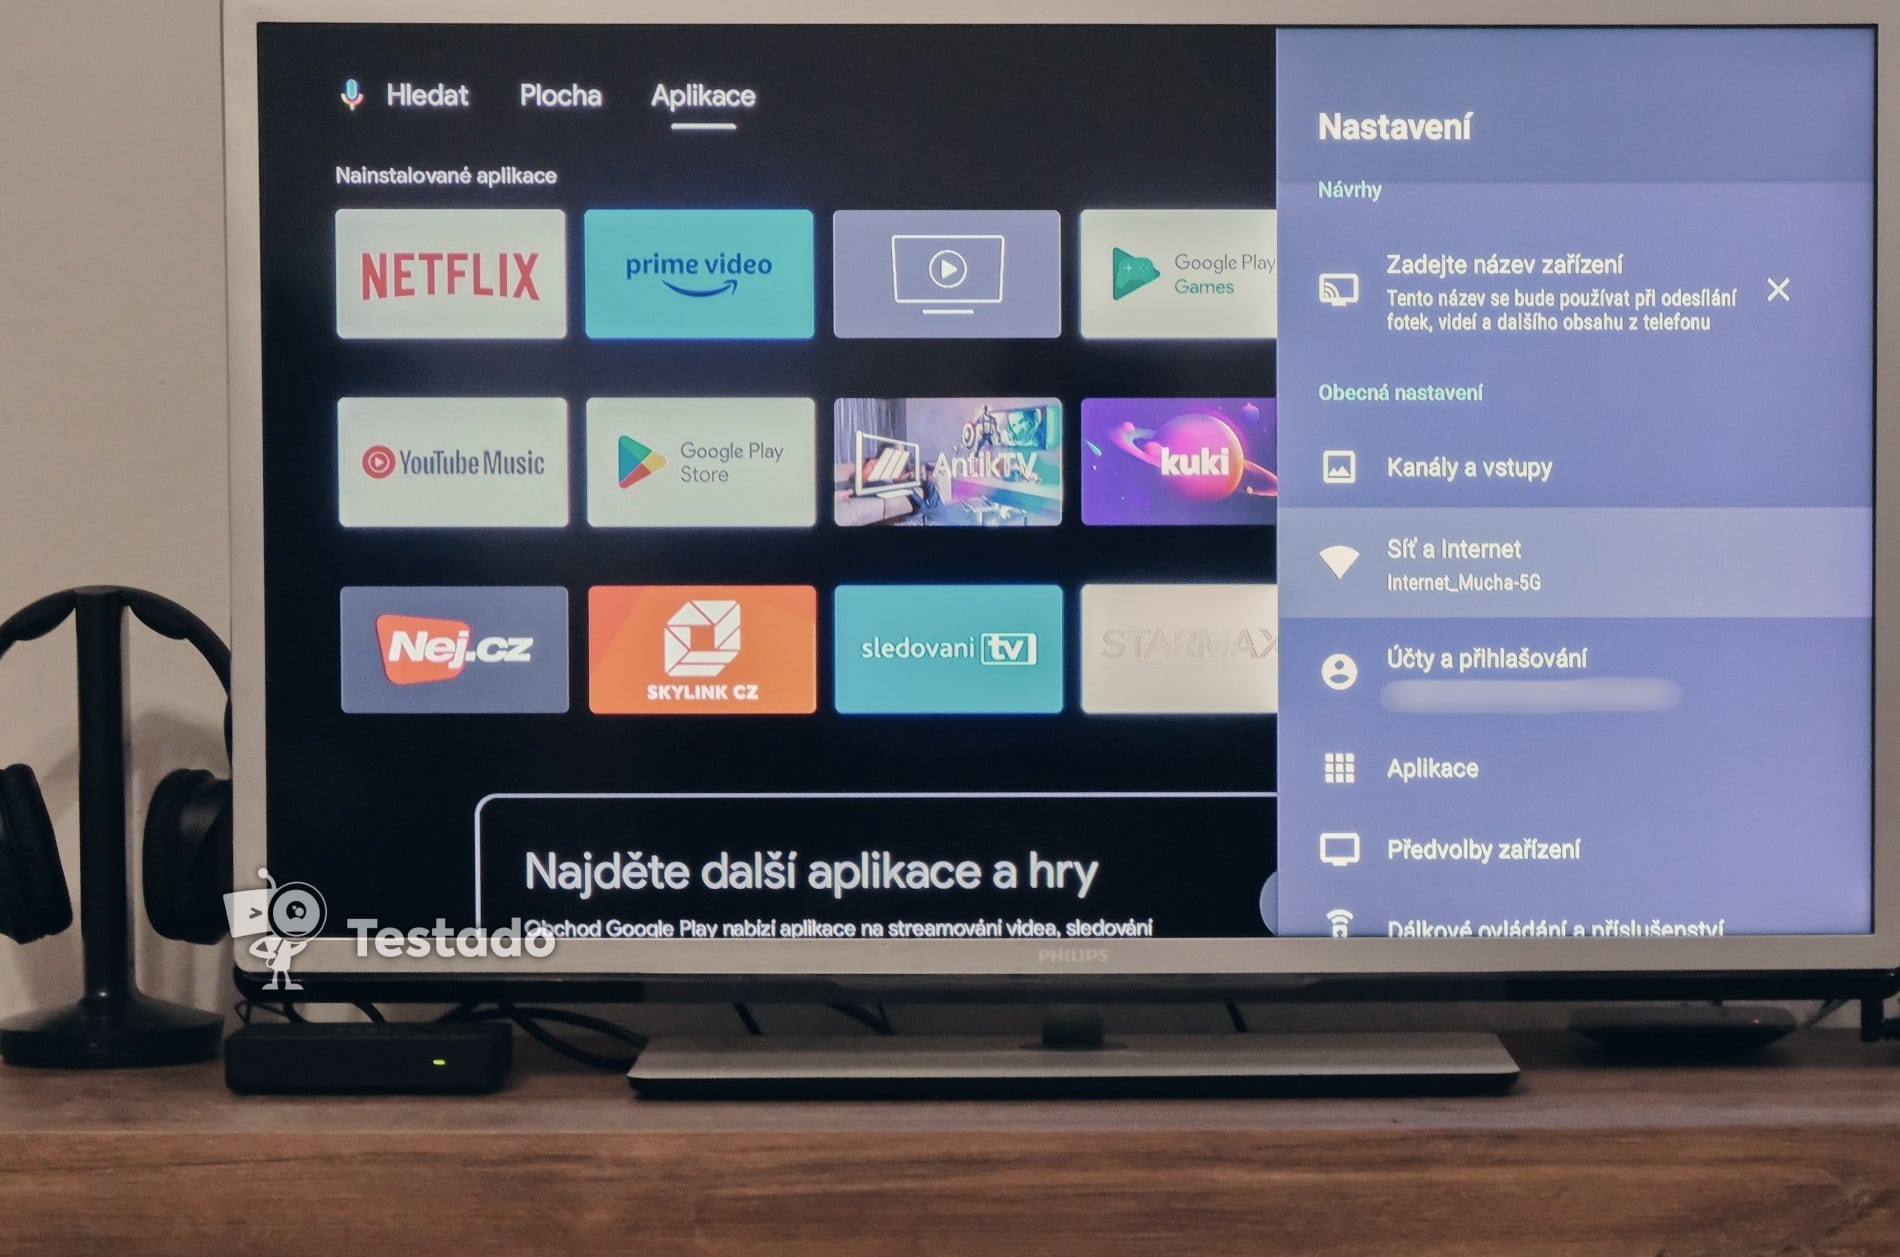 Tesla MediaBox XT850 android TV menu